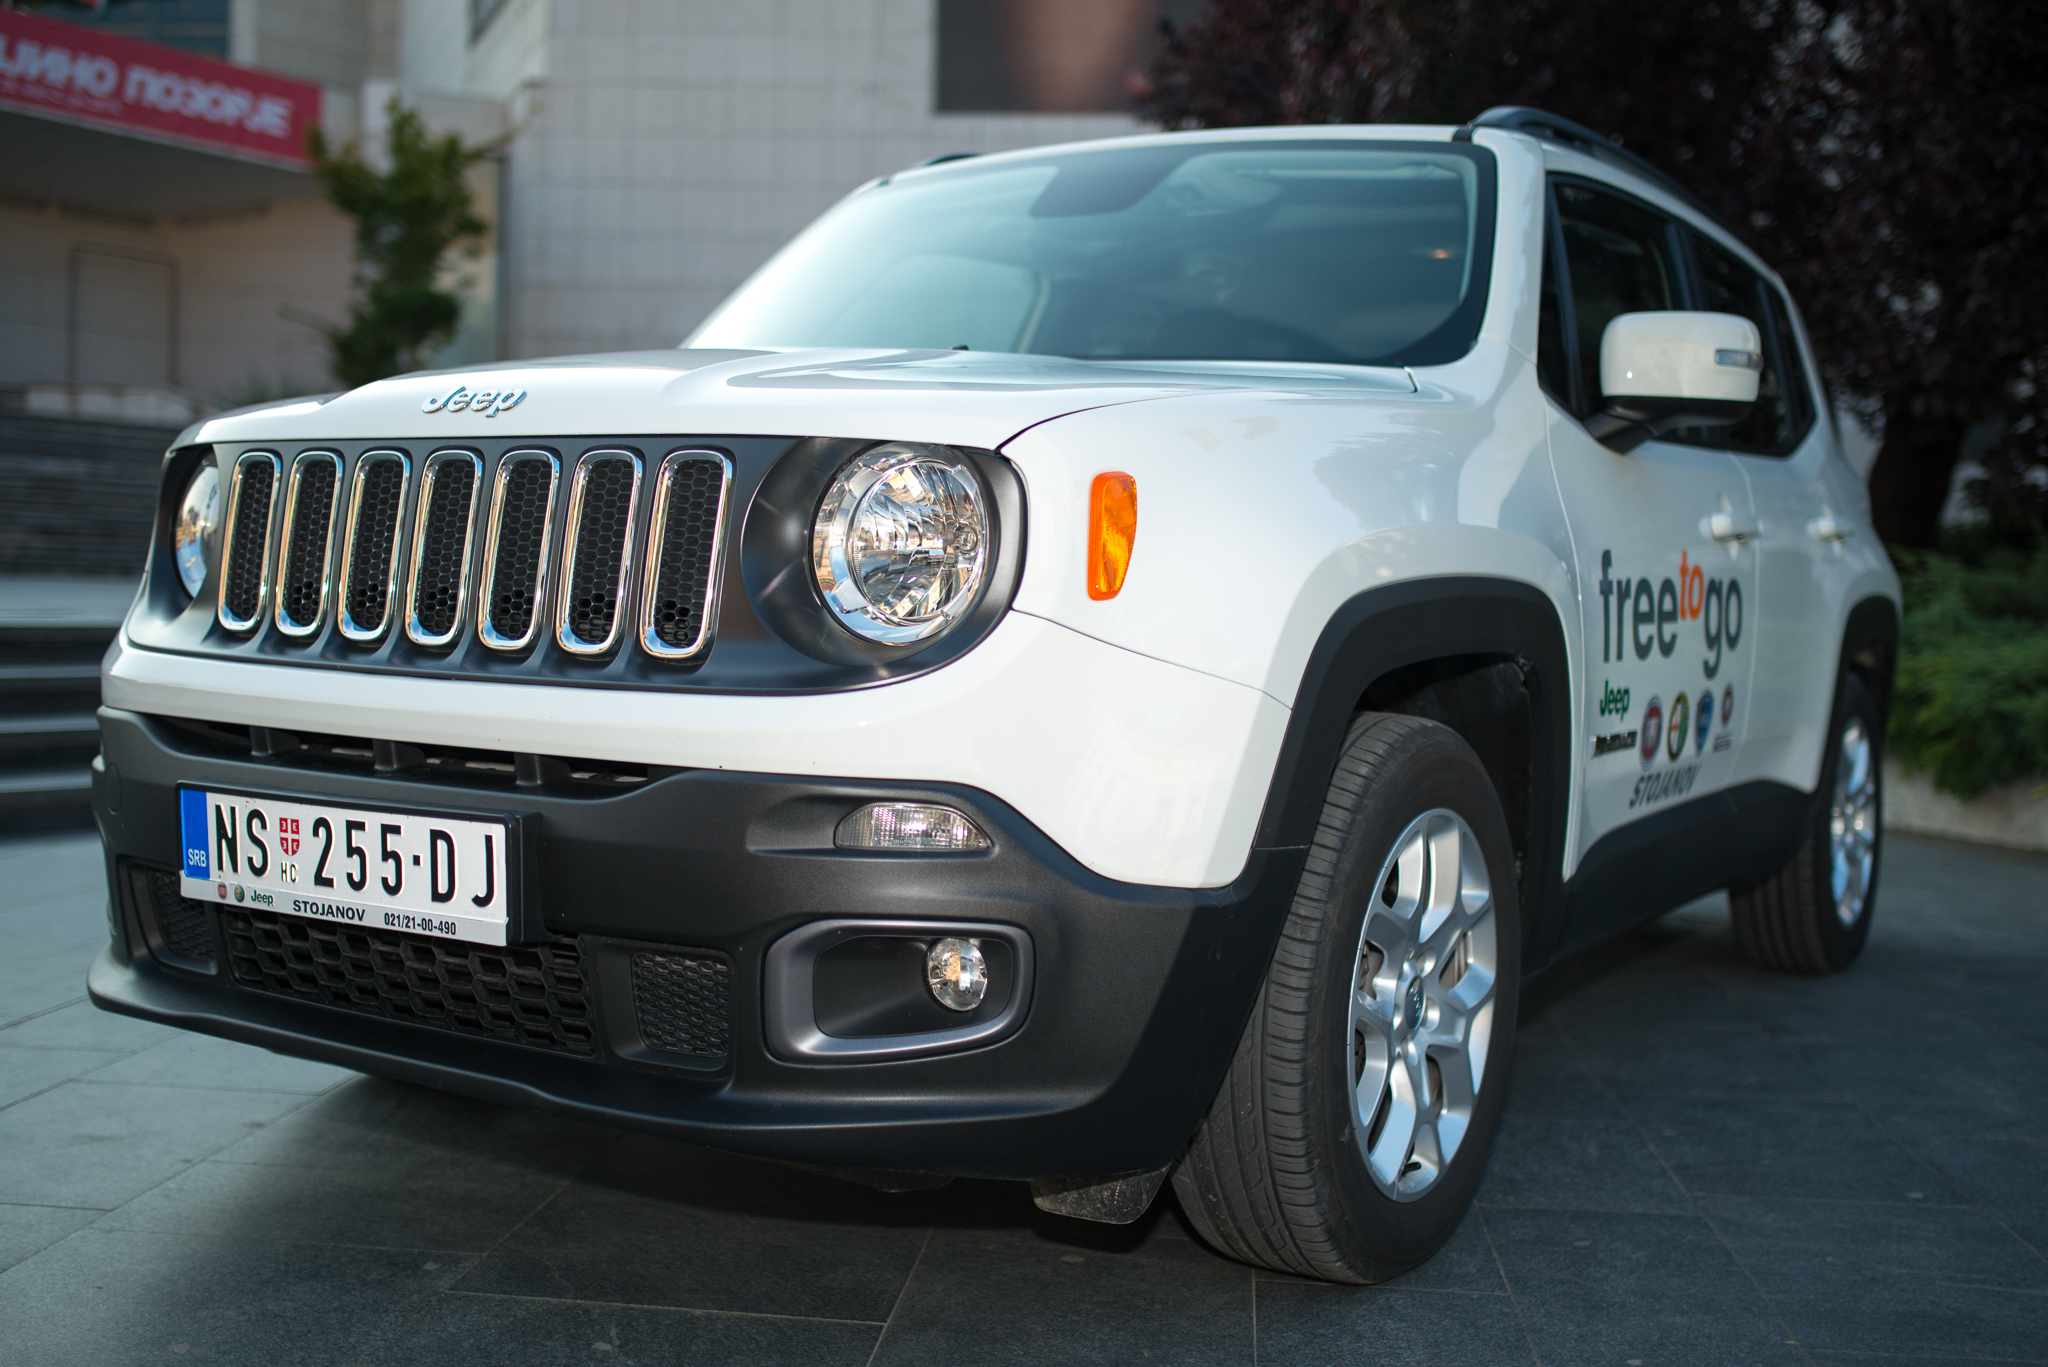 PROMO CENA! Jeep Renegade od 15.490 eur Stojanov doo